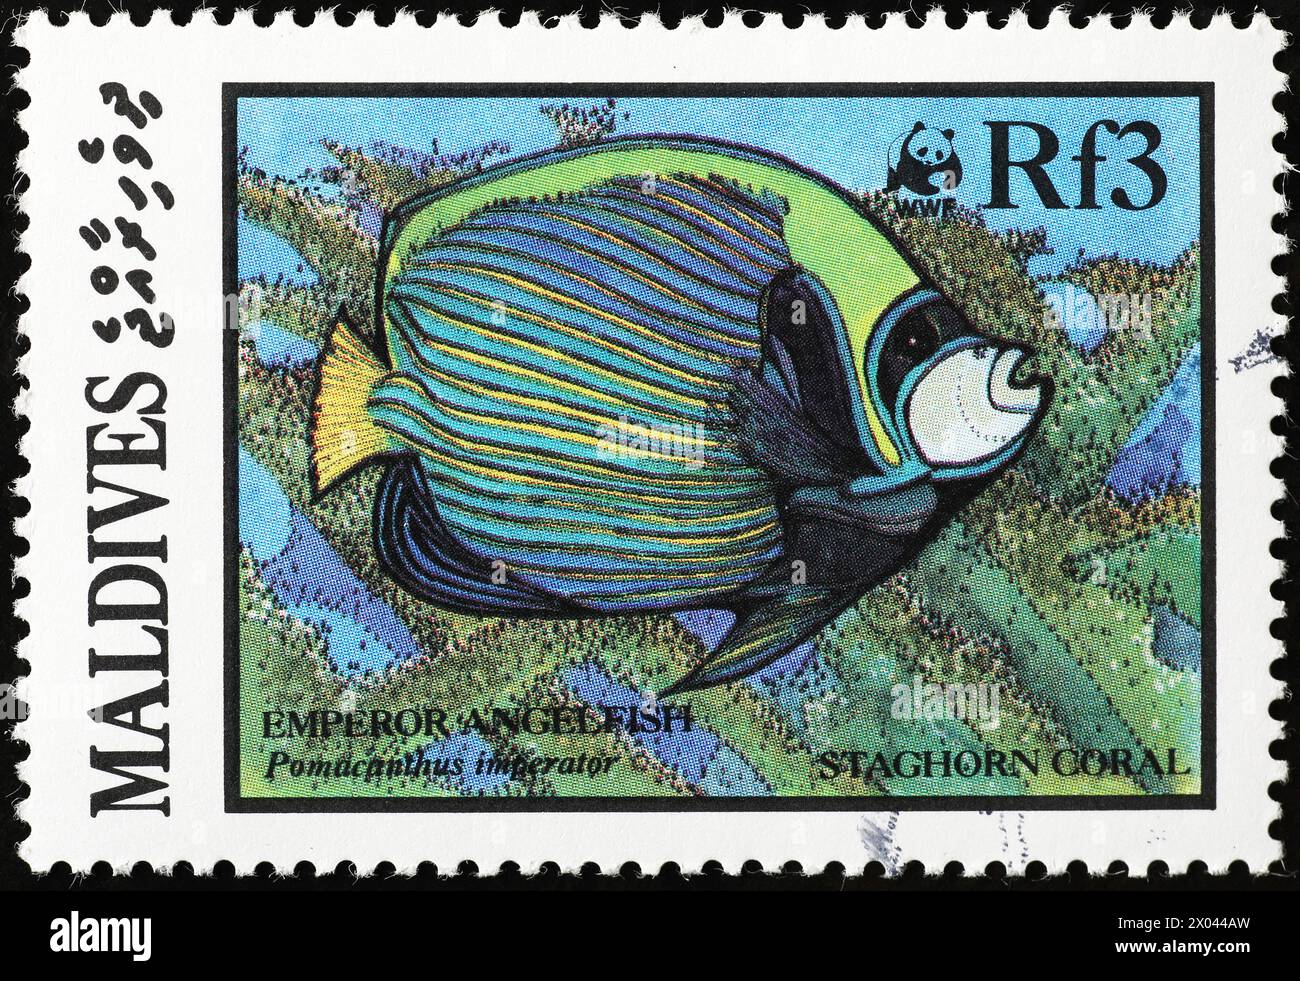 Emperor angelfish on postage stamp of Maldives Stock Photo